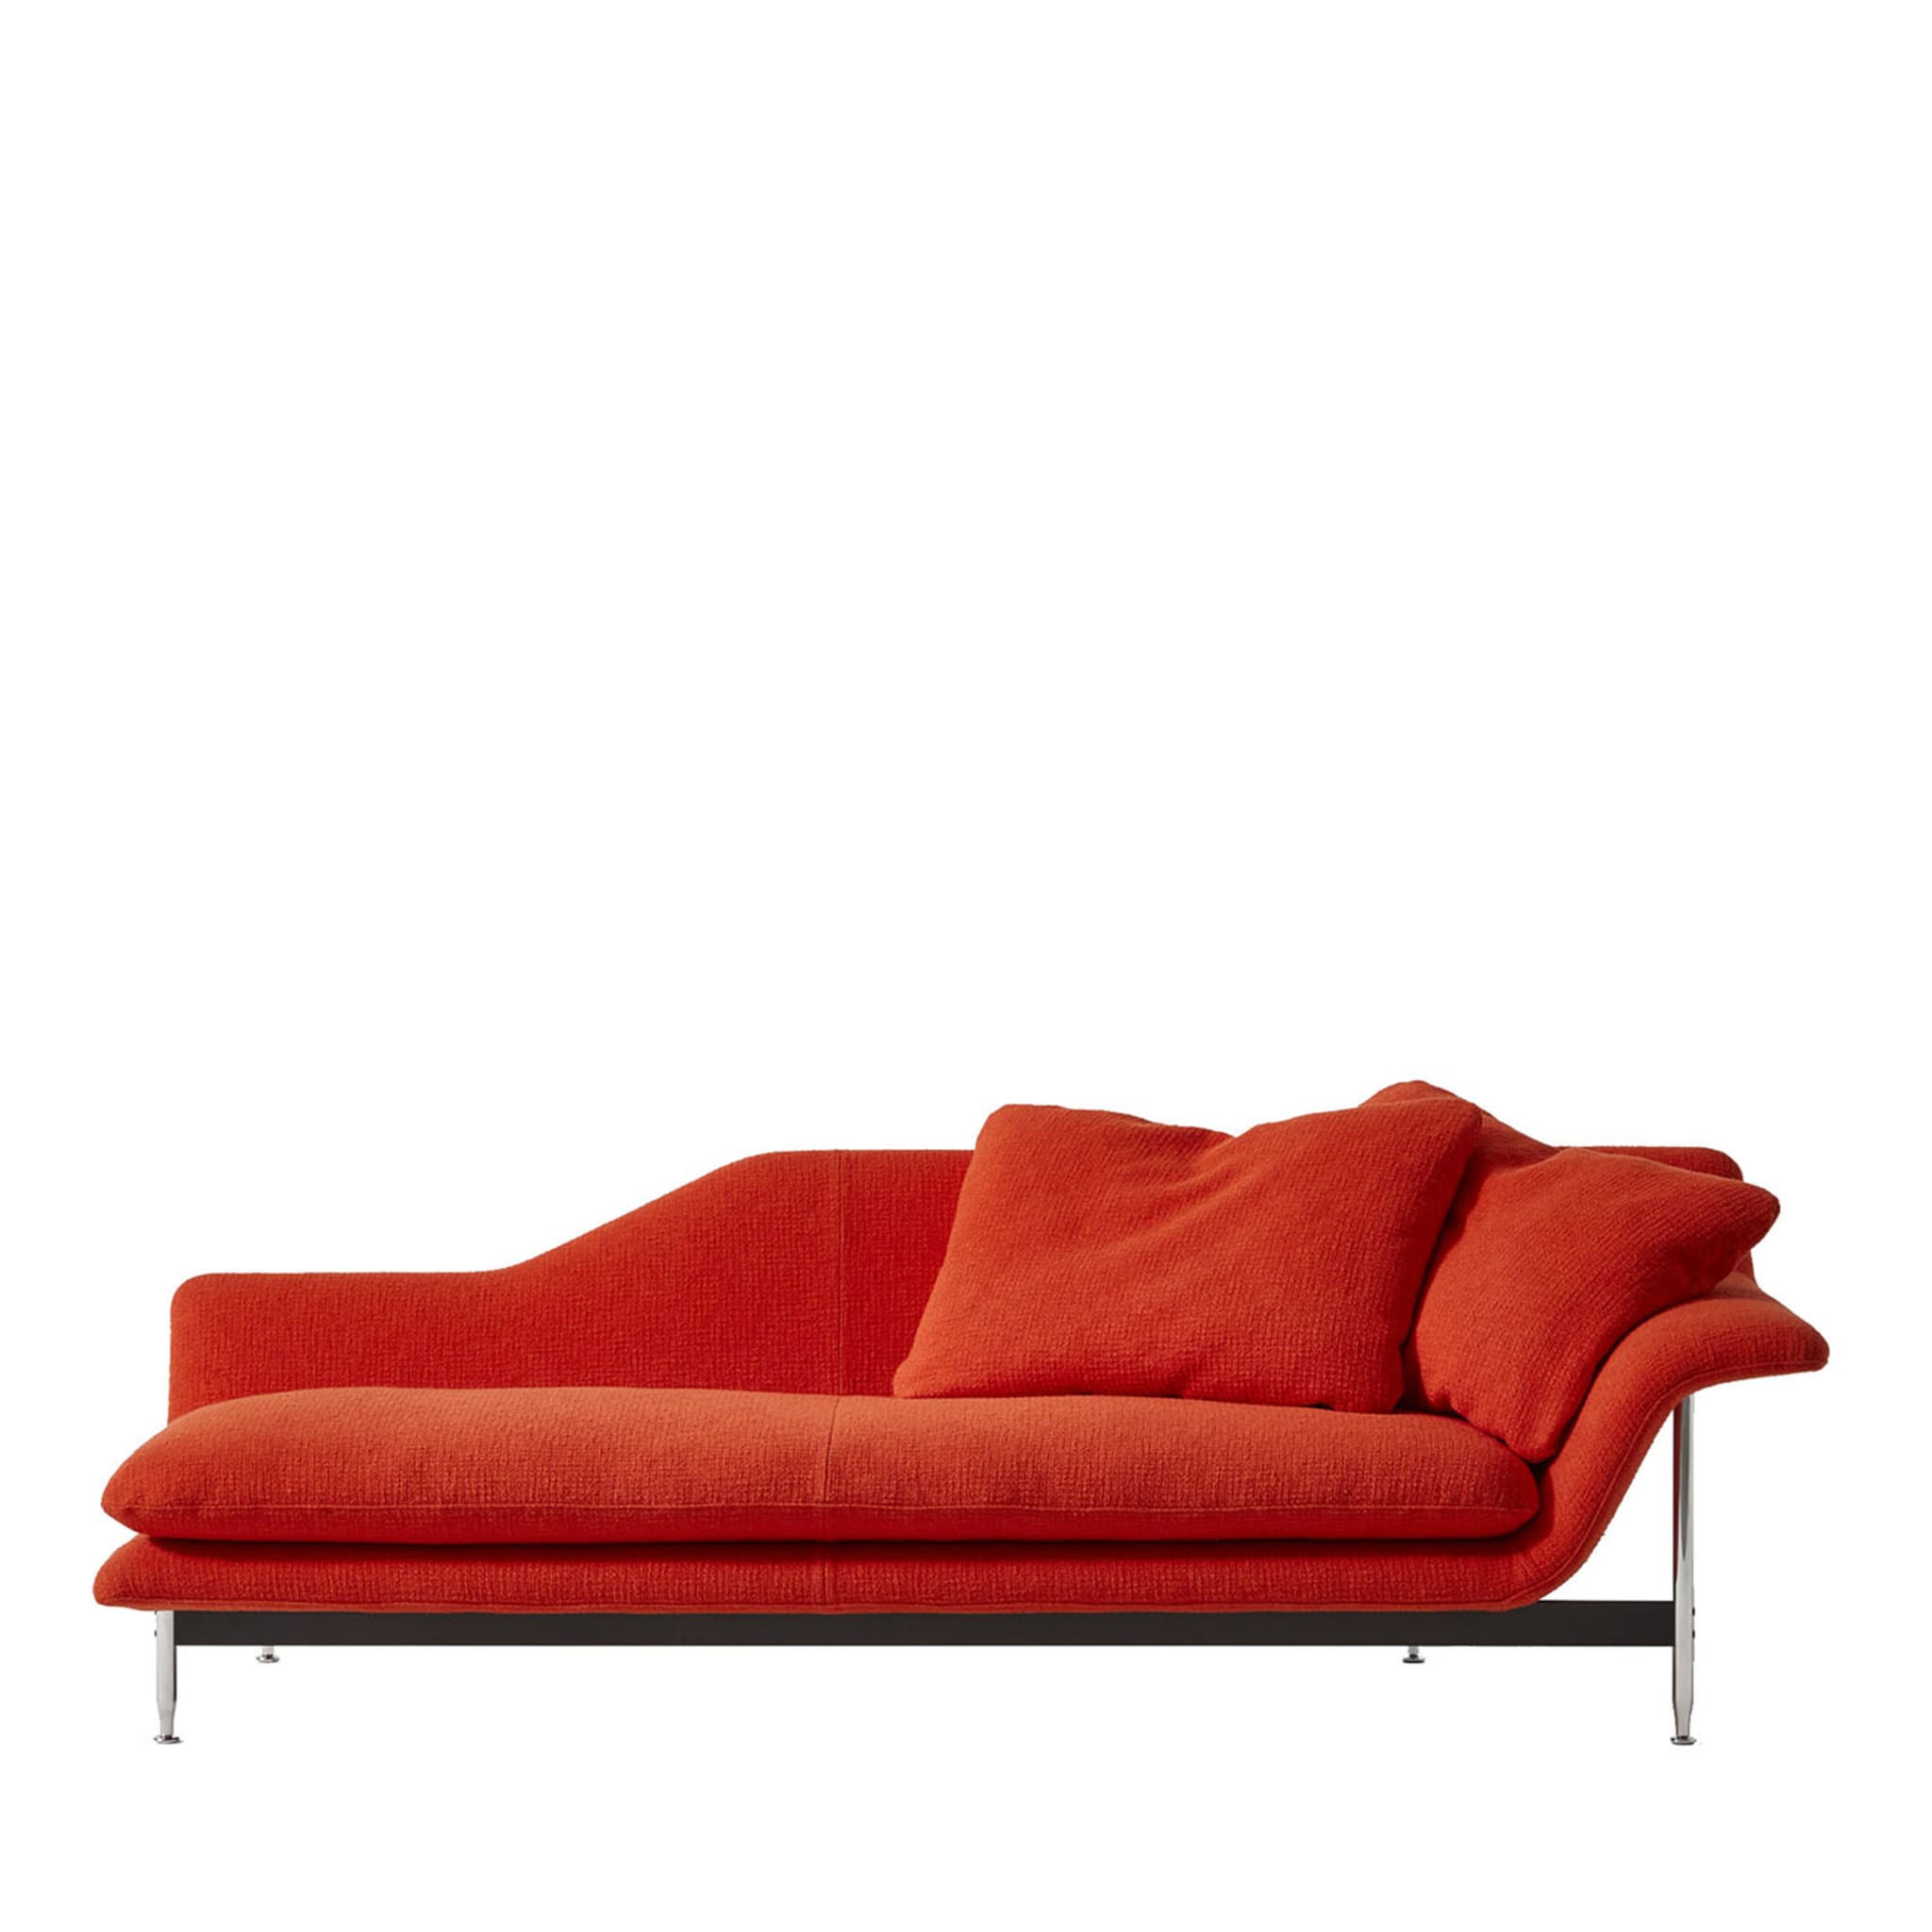 Esosoft Right-Sided Orange Chaise Longue by Antonio Citterio - Main view